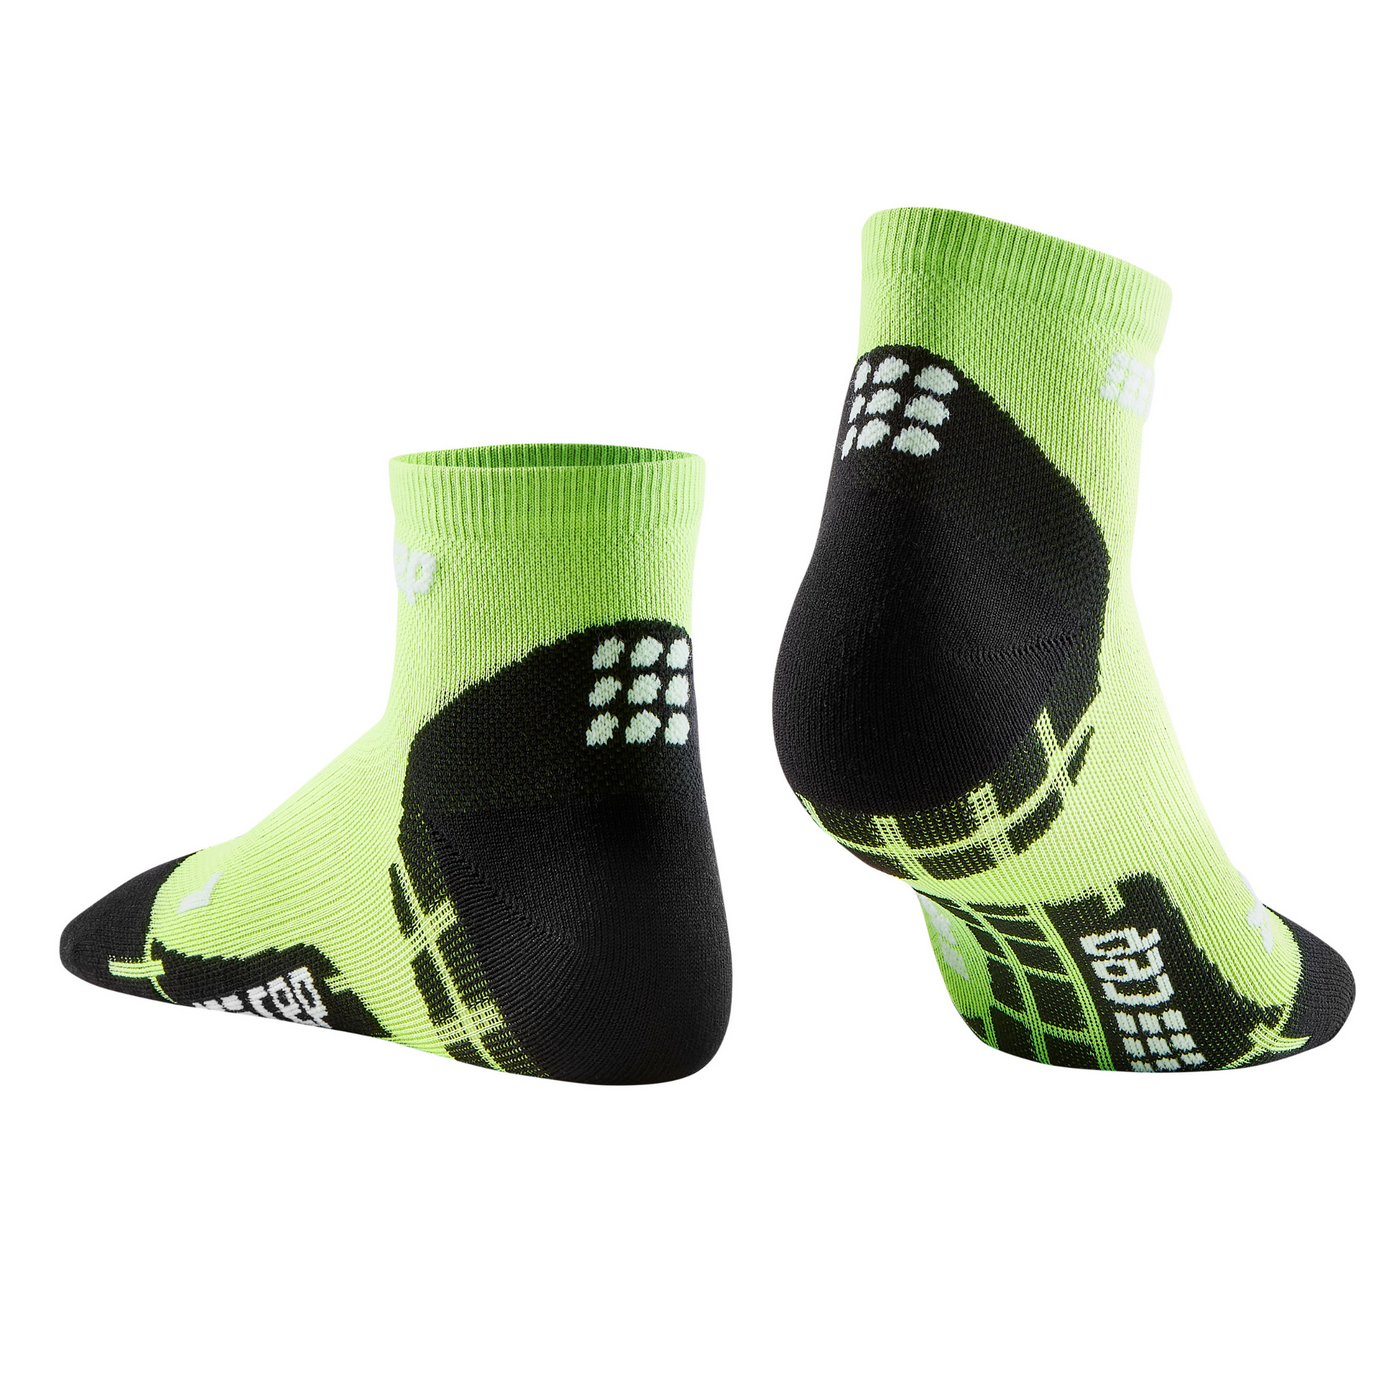 Ultralight Low Cut Compression Socks, Women, Flash Green, Back View